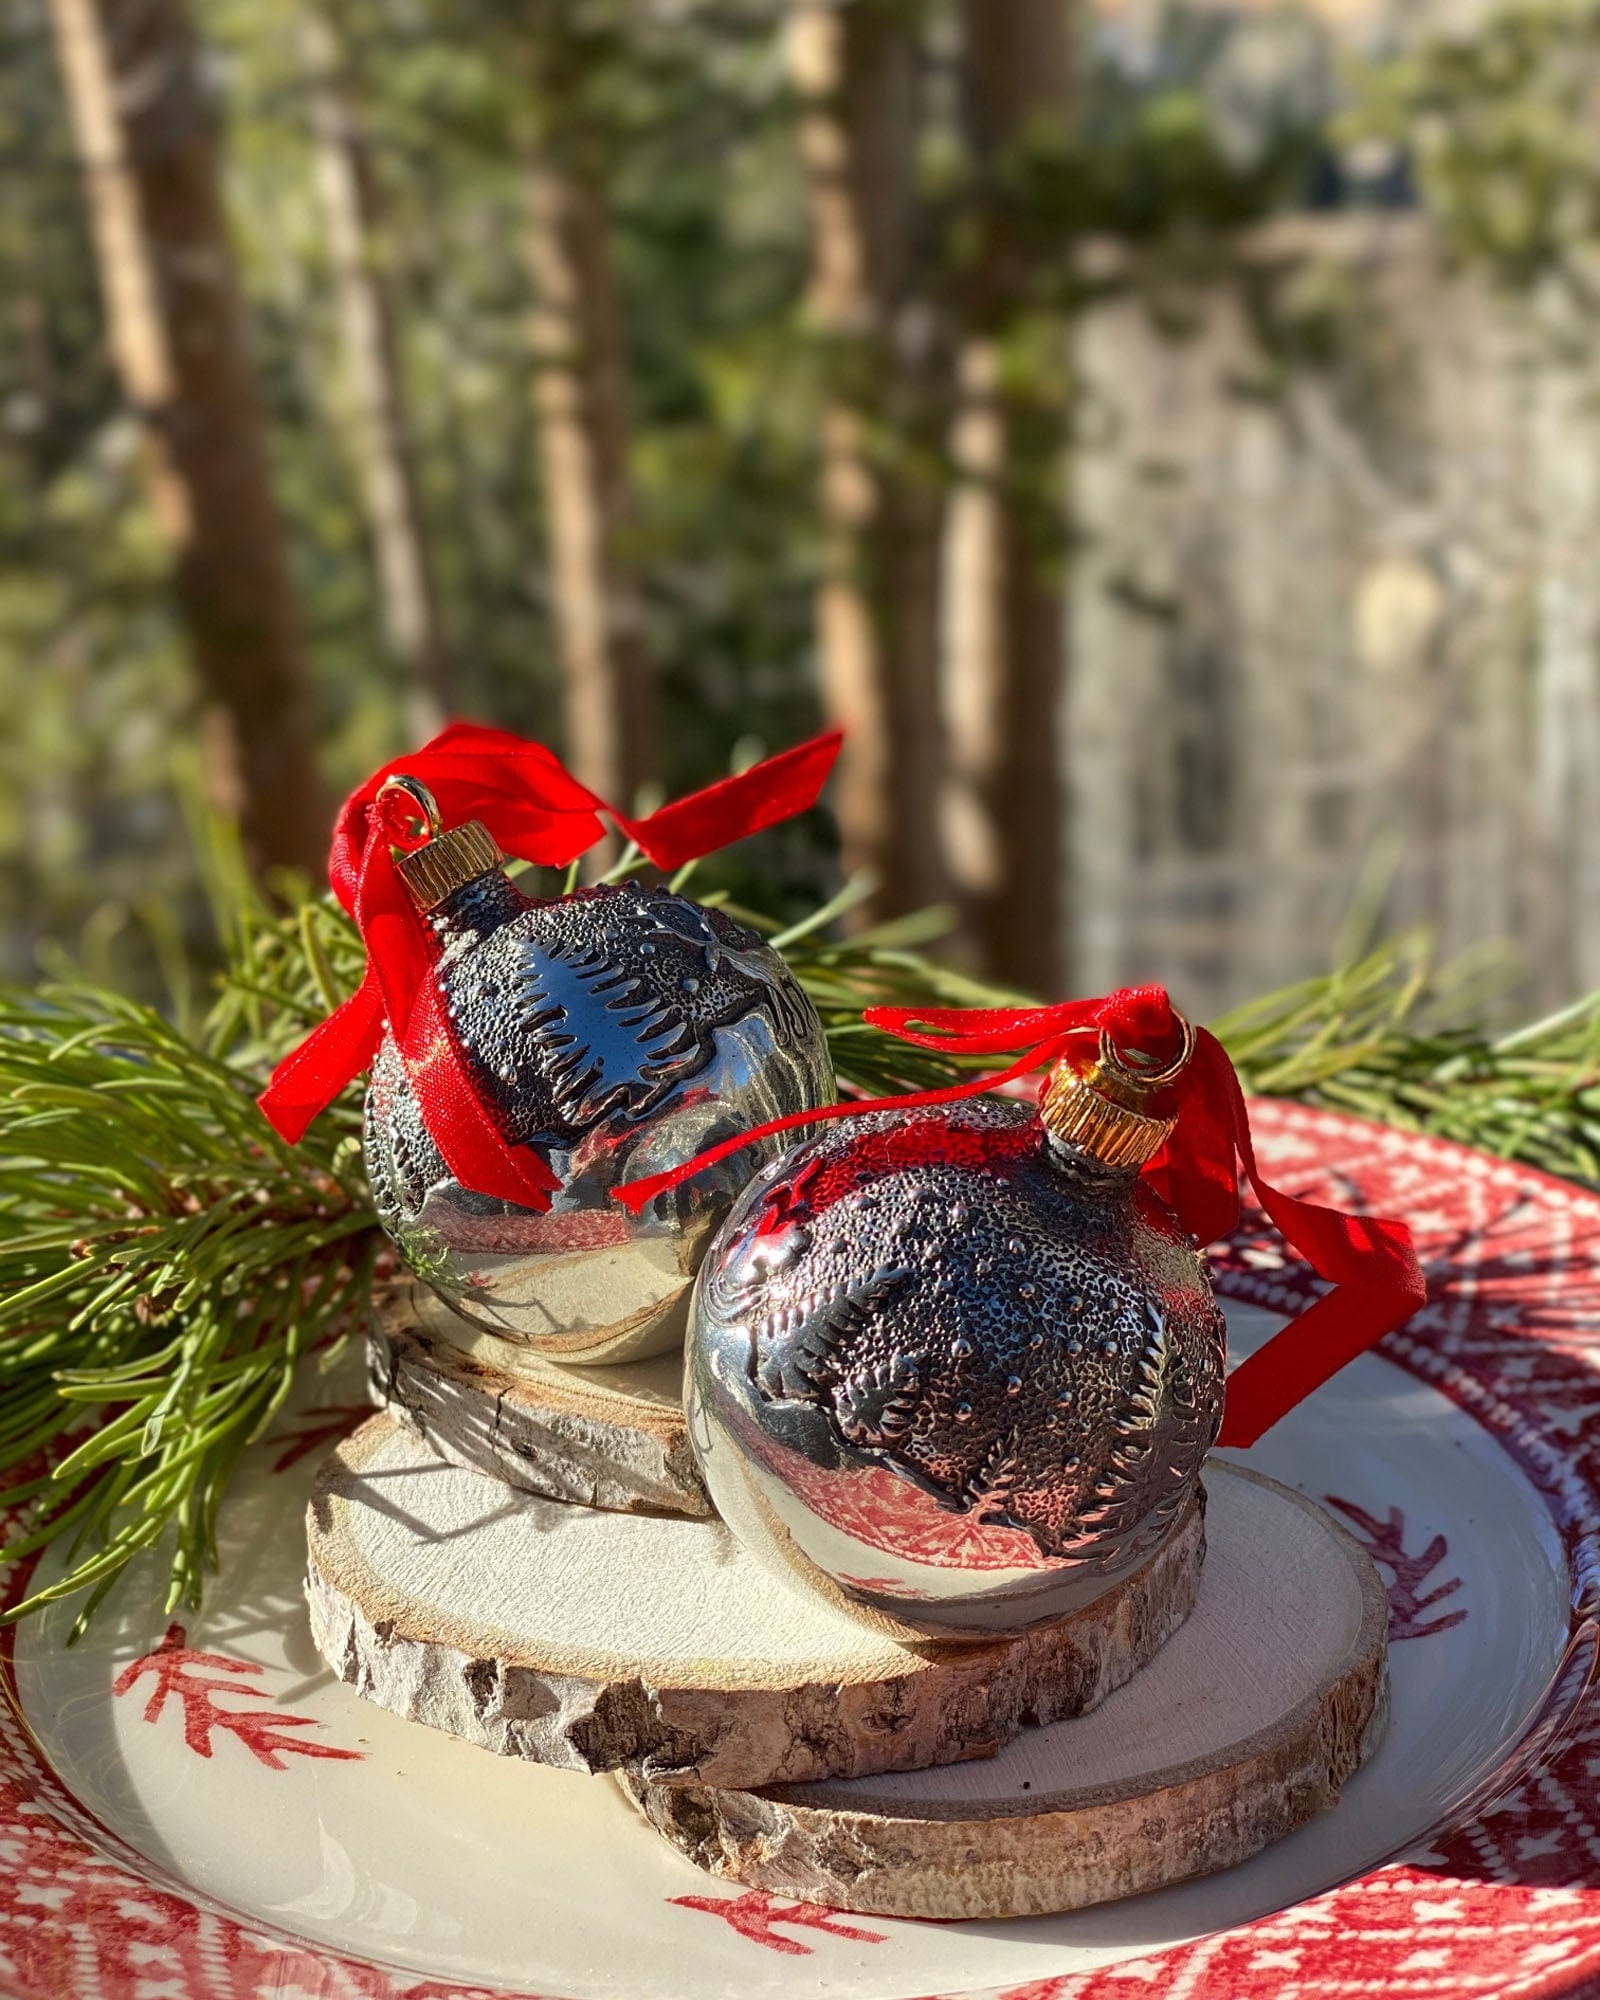 How to Make DIY Christmas Ornaments to Sell - Mornings on Macedonia